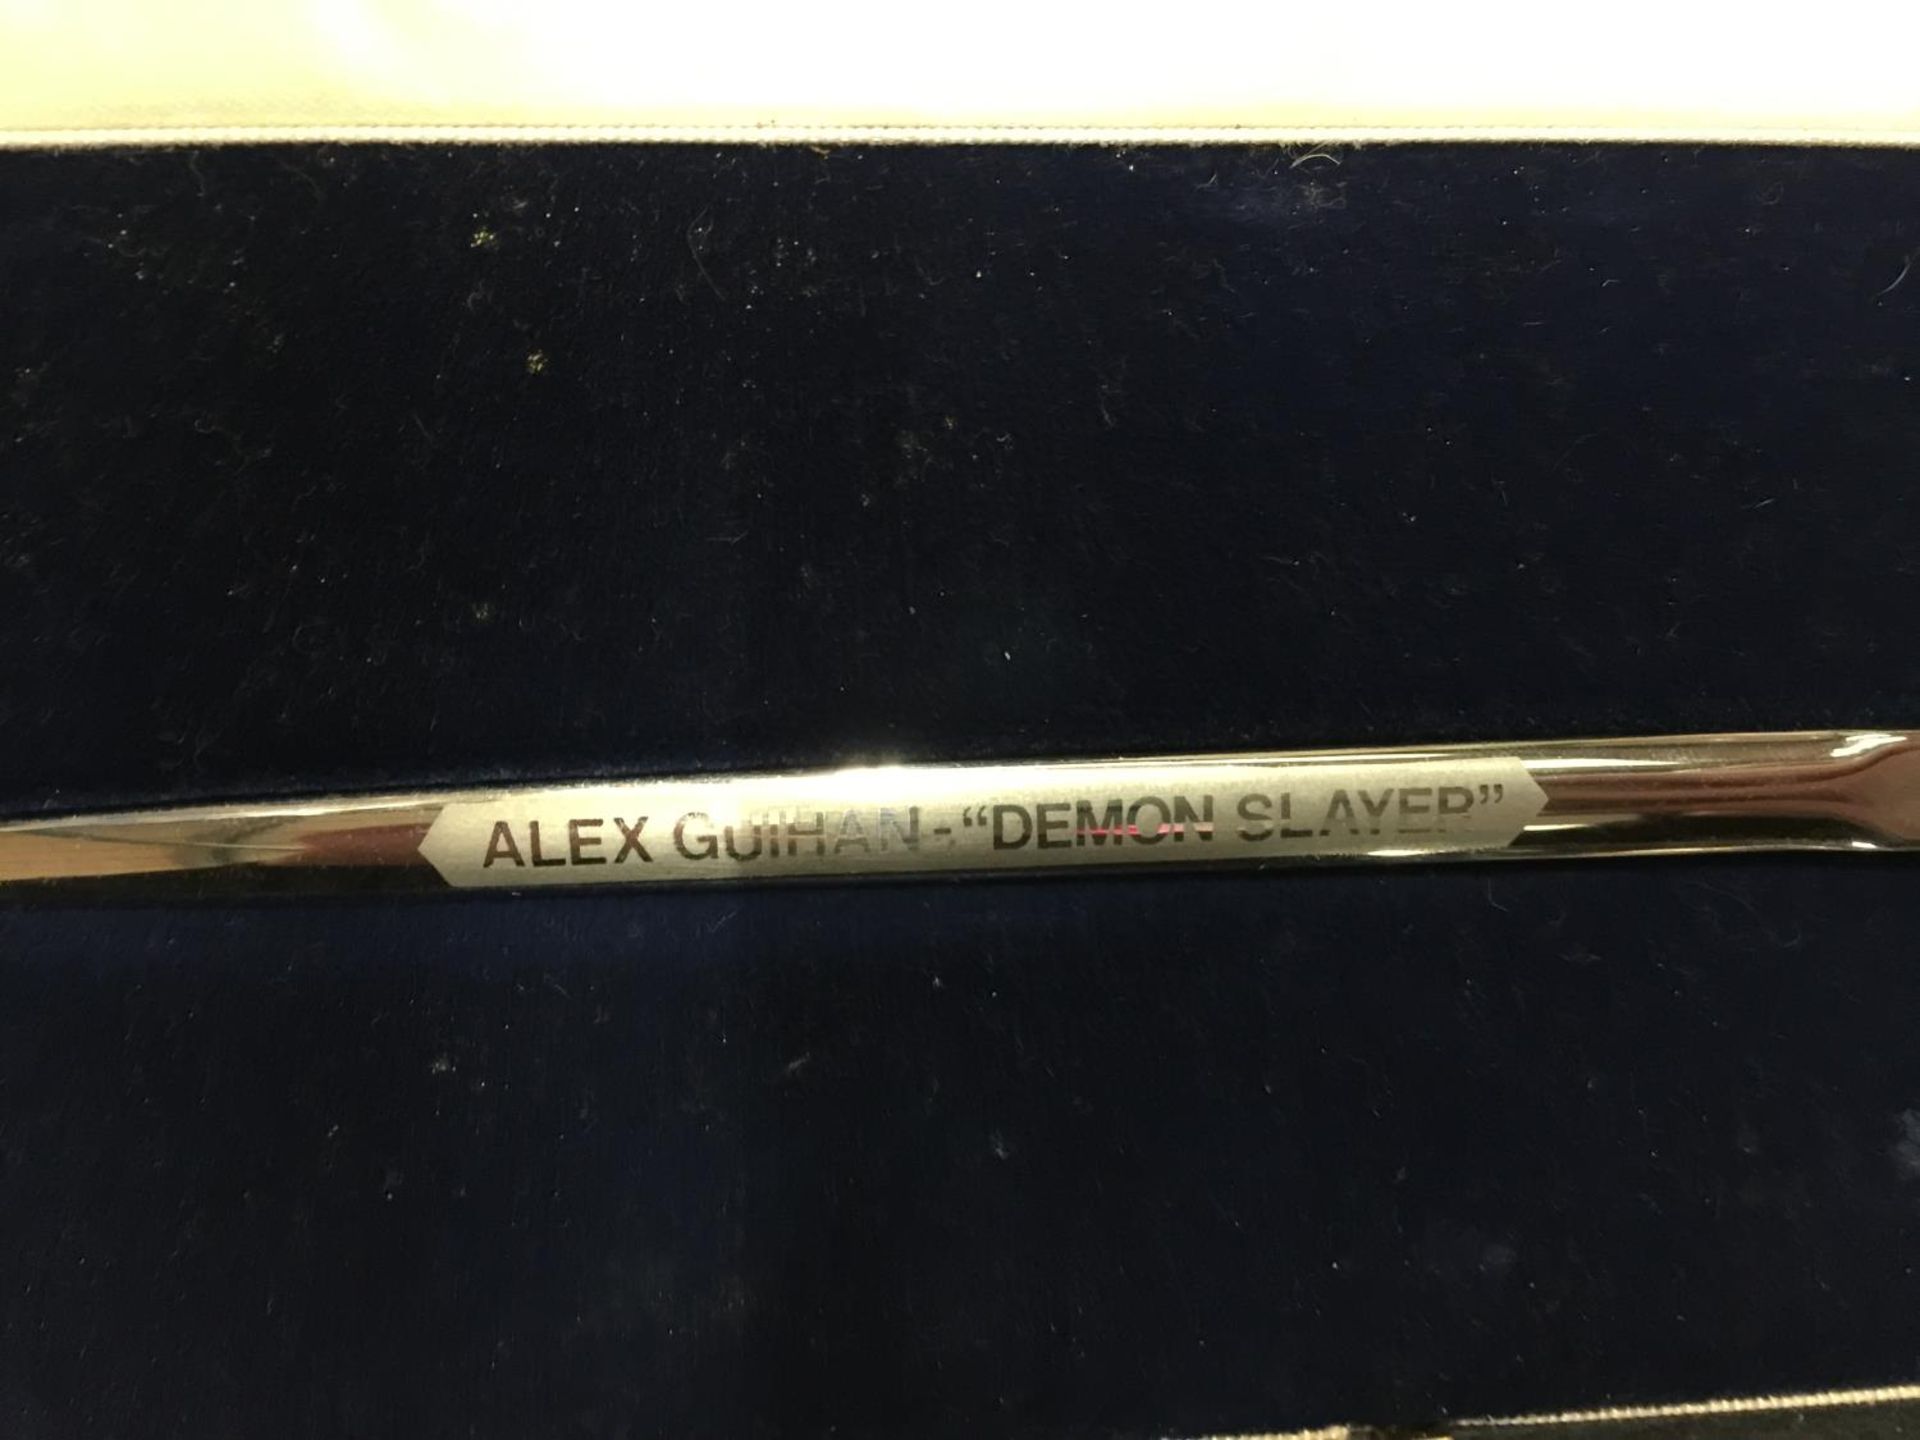 A WILKINSON SWORD REPLICA OF ALEX GUIHAN - DEMON SLAYER, BOXED - Image 2 of 2